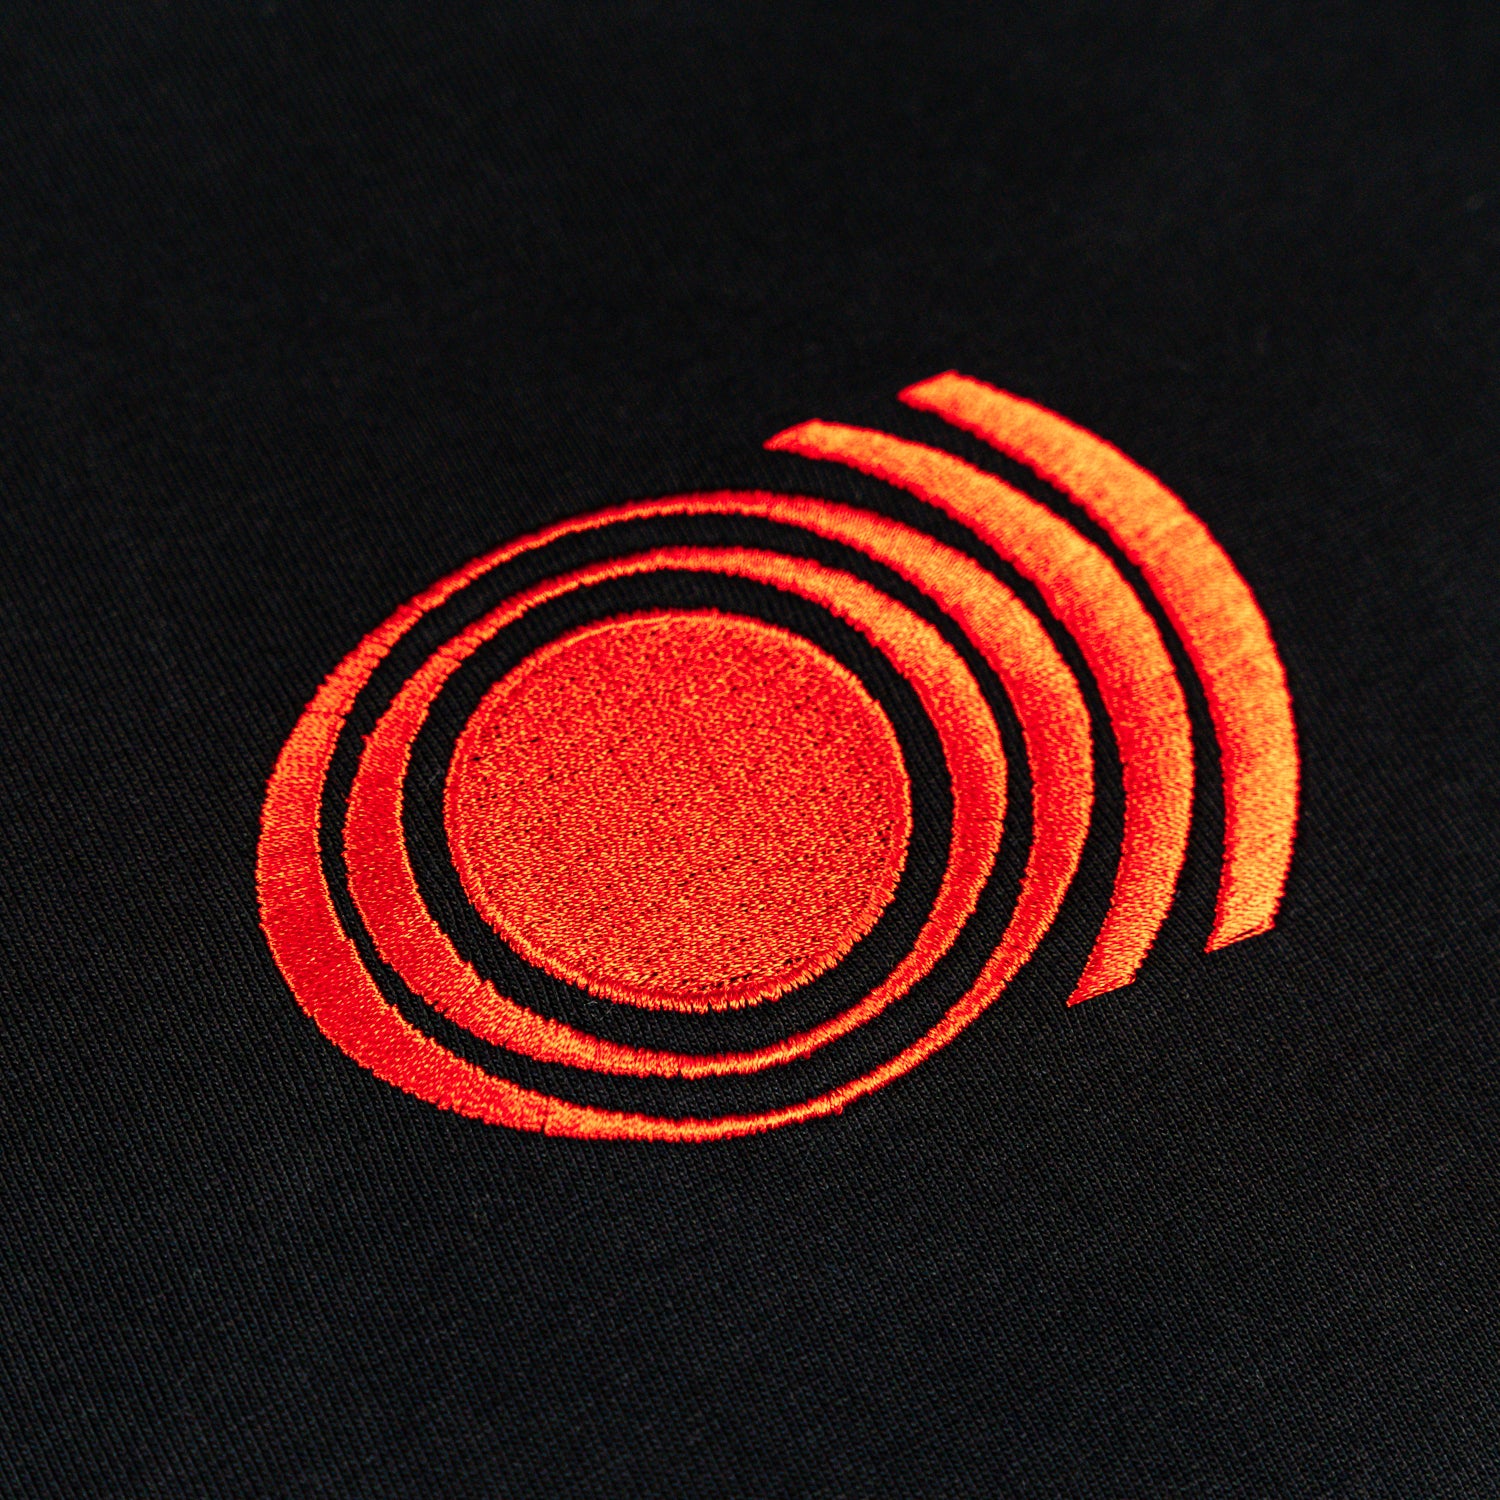 SUNN O))) "Embroidered Logo - Red On Black" Longsleeve